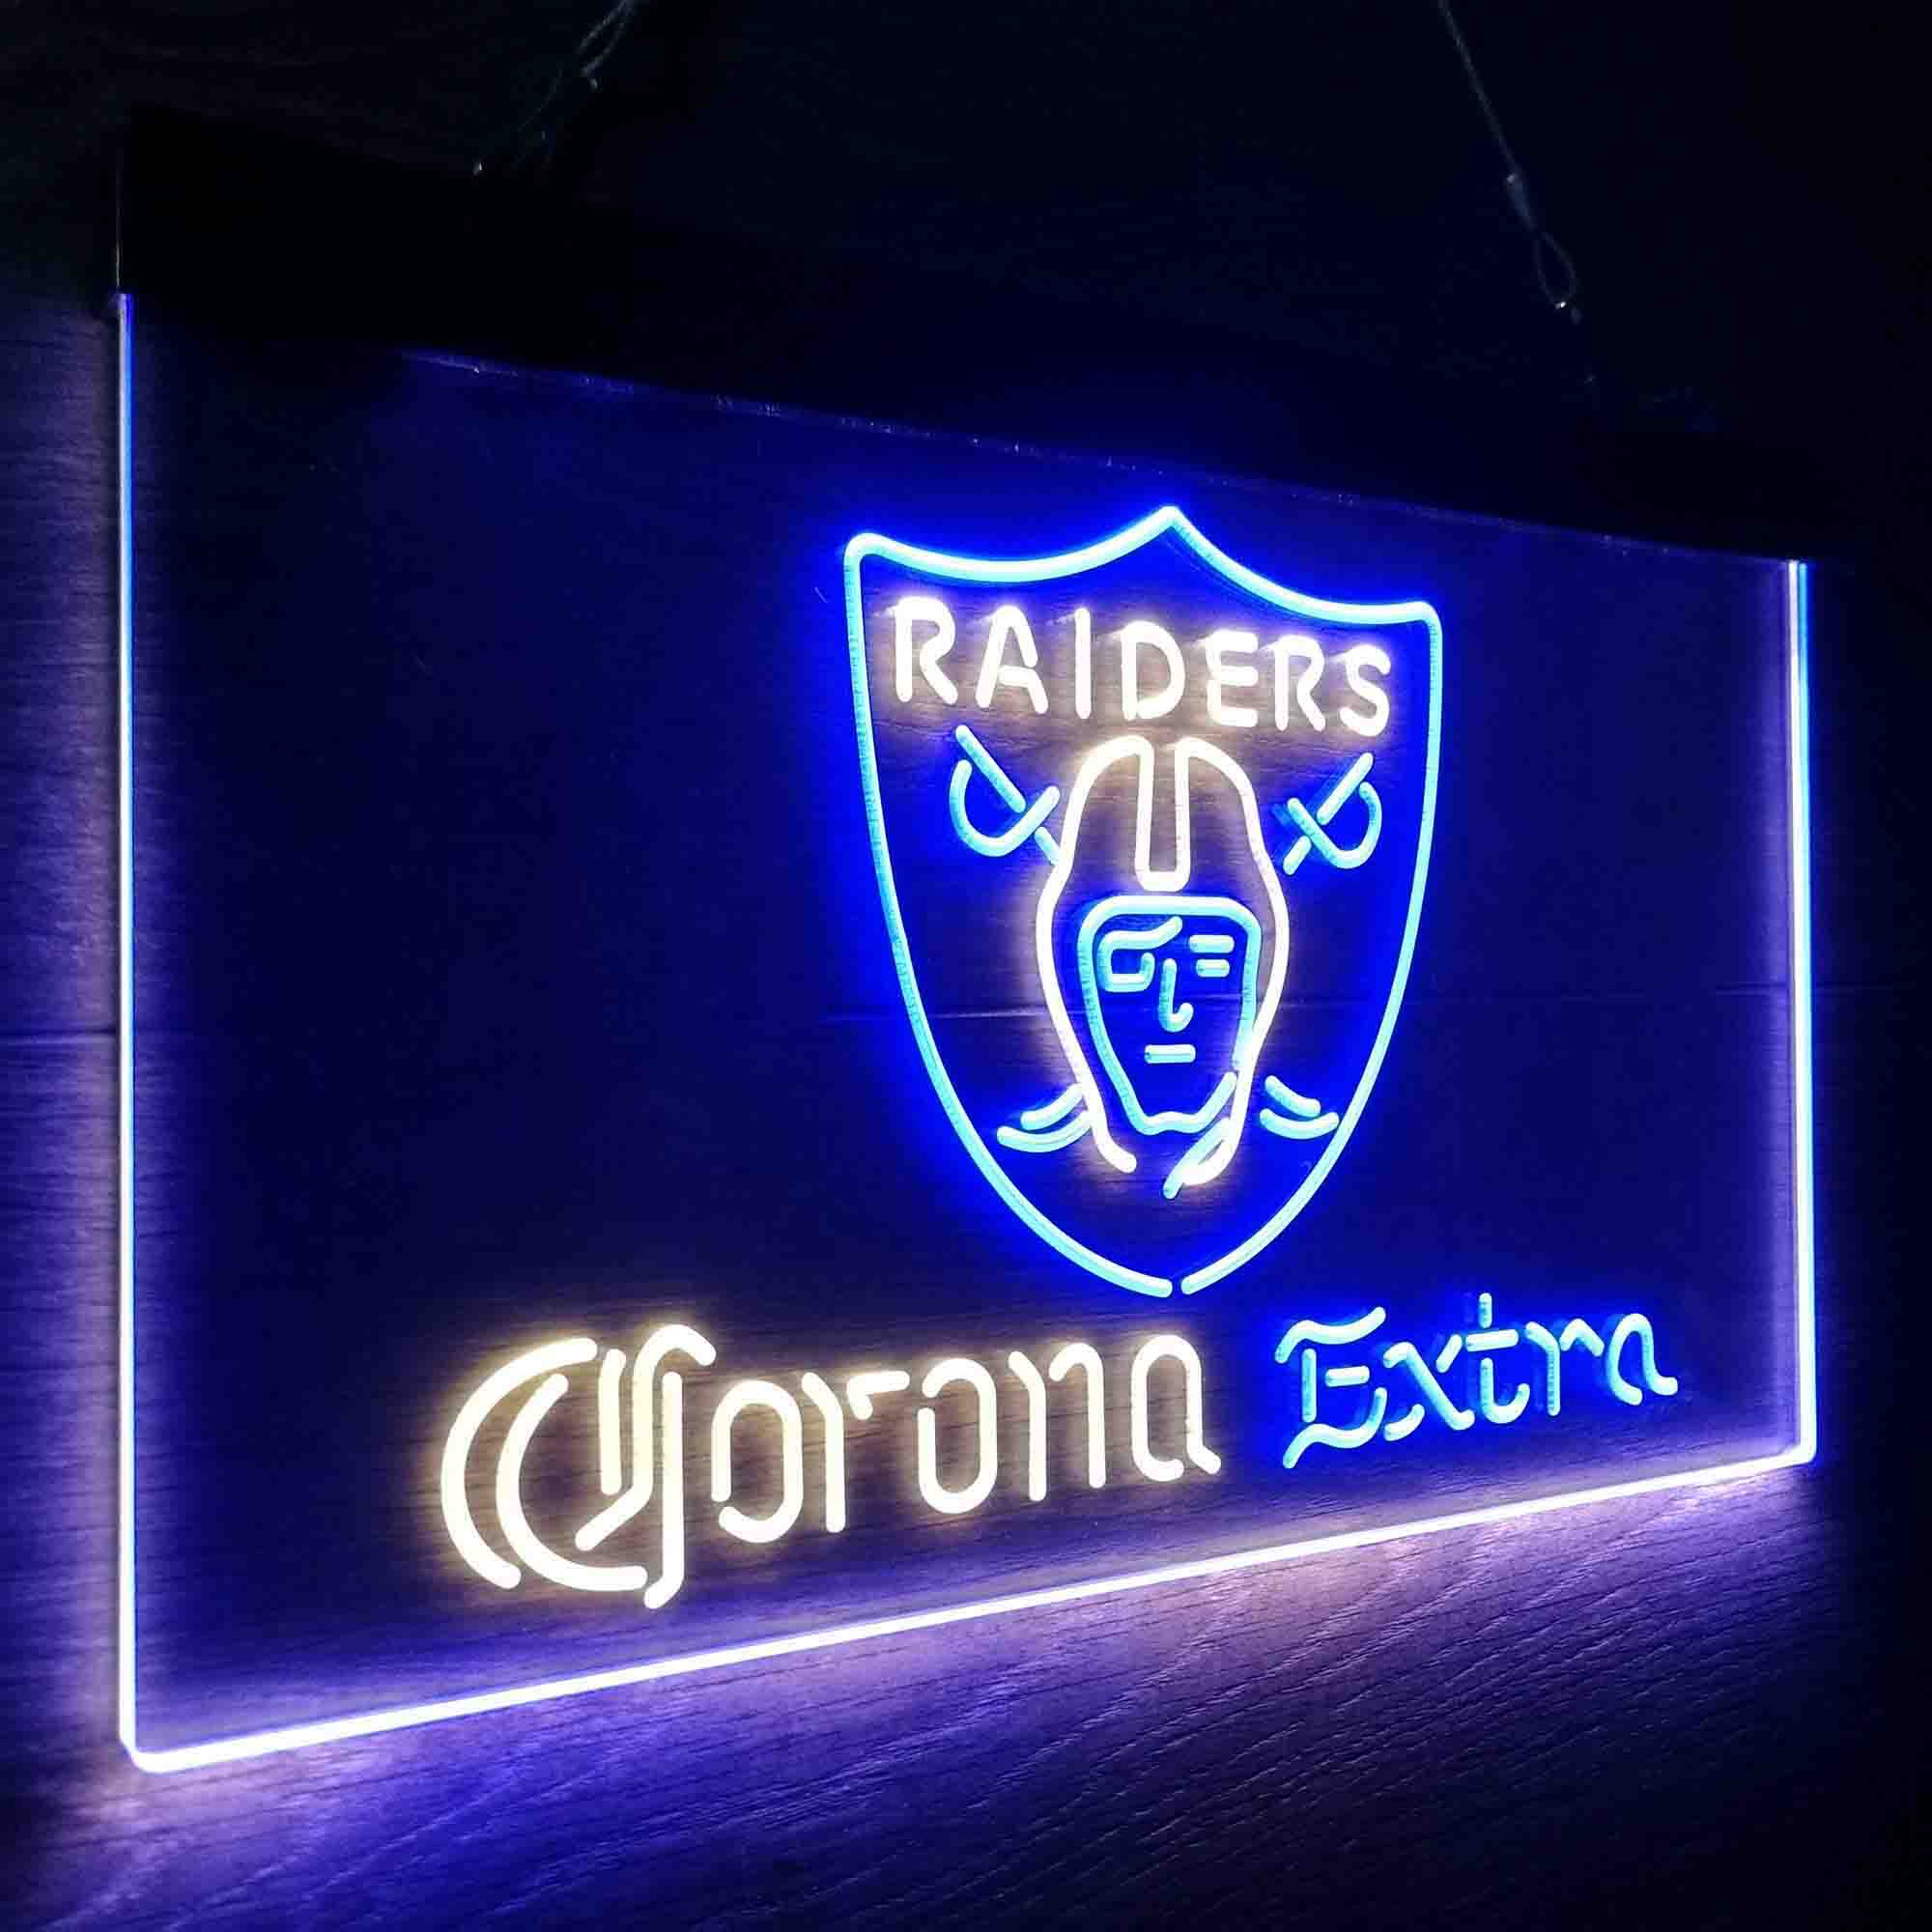 Oakland Raiders Corona Extra Bar Neon-Like LED Sign - ProLedSign